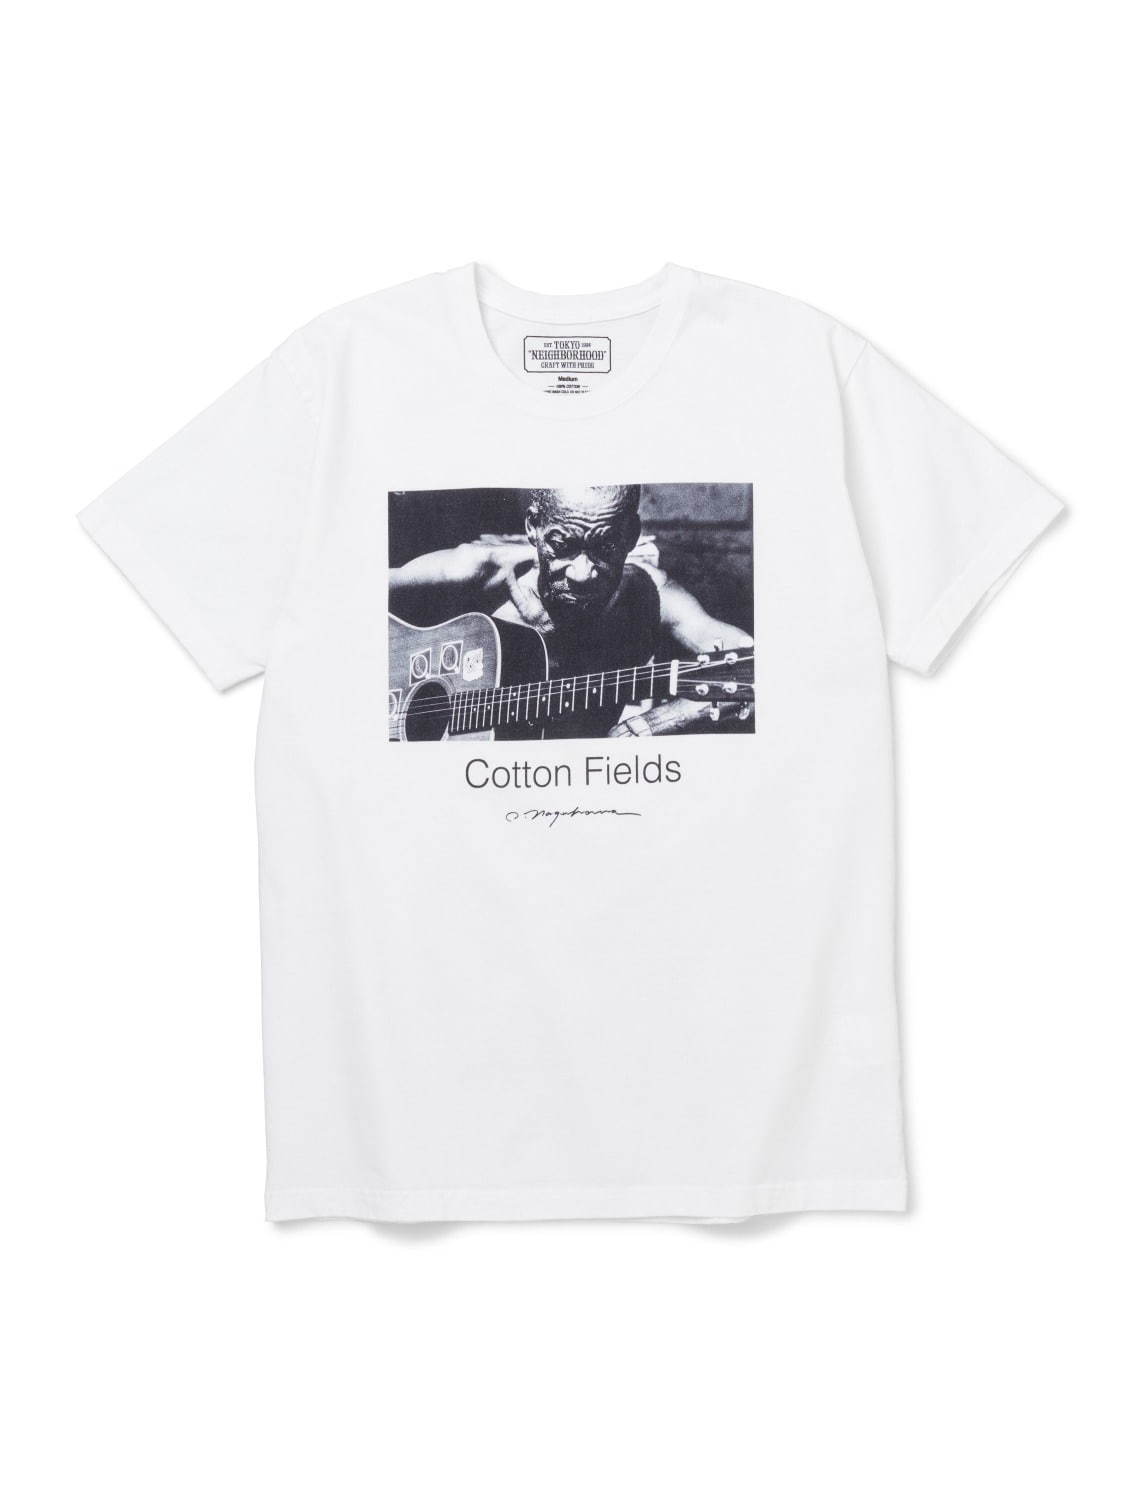 「Cotton Fields」発売記念限定Tシャツ 8,000円＋税
※ネイバーフッド店舗での発売なし。